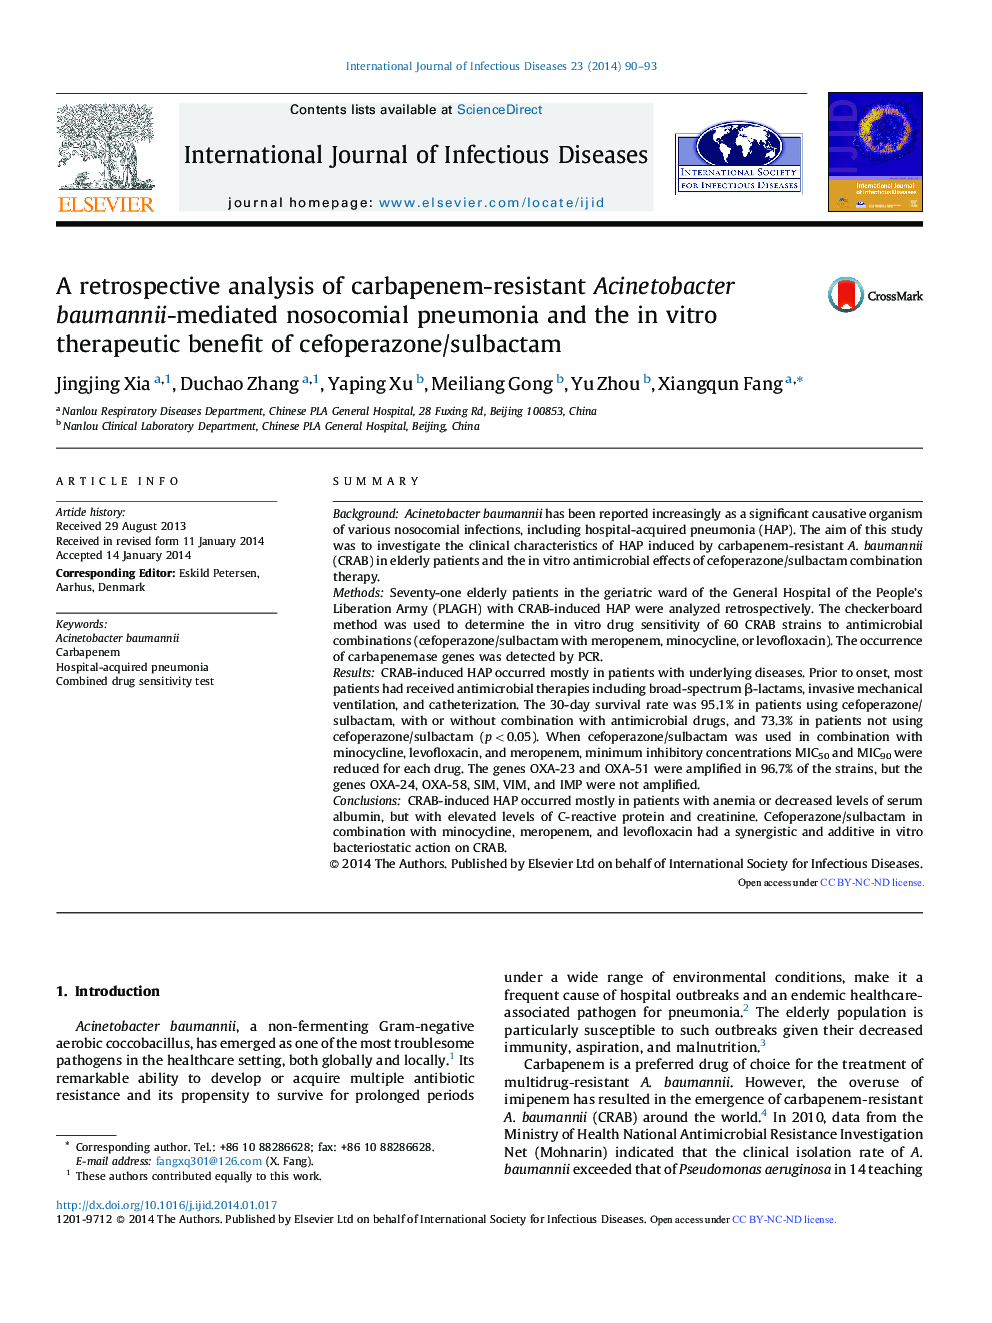 A retrospective analysis of carbapenem-resistant Acinetobacter baumannii-mediated nosocomial pneumonia and the in vitro therapeutic benefit of cefoperazone/sulbactam